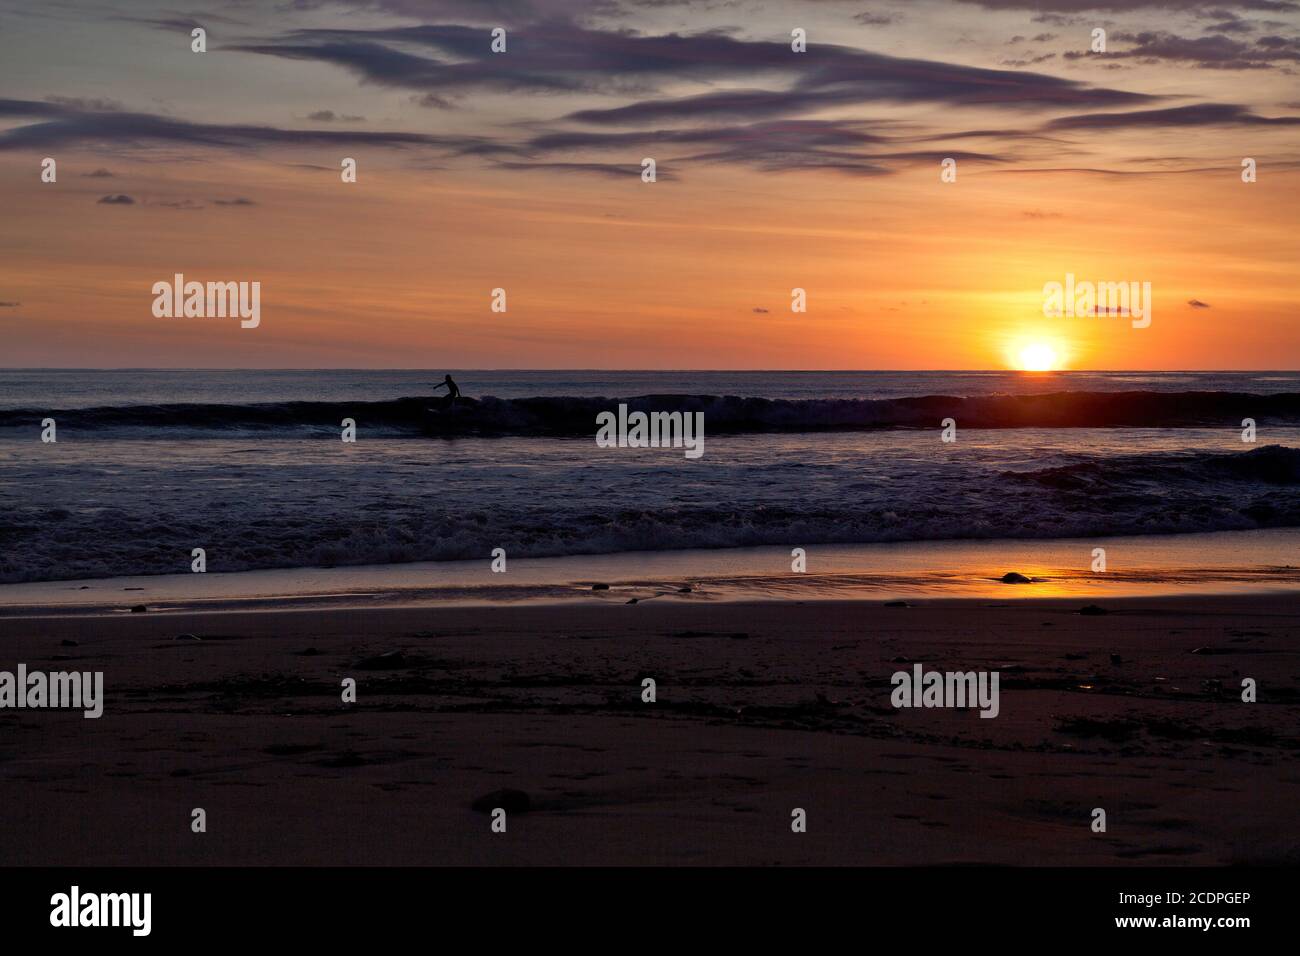 Surfers on the beach of Santa Teresa at sunset / Costa Rica Stock Photo